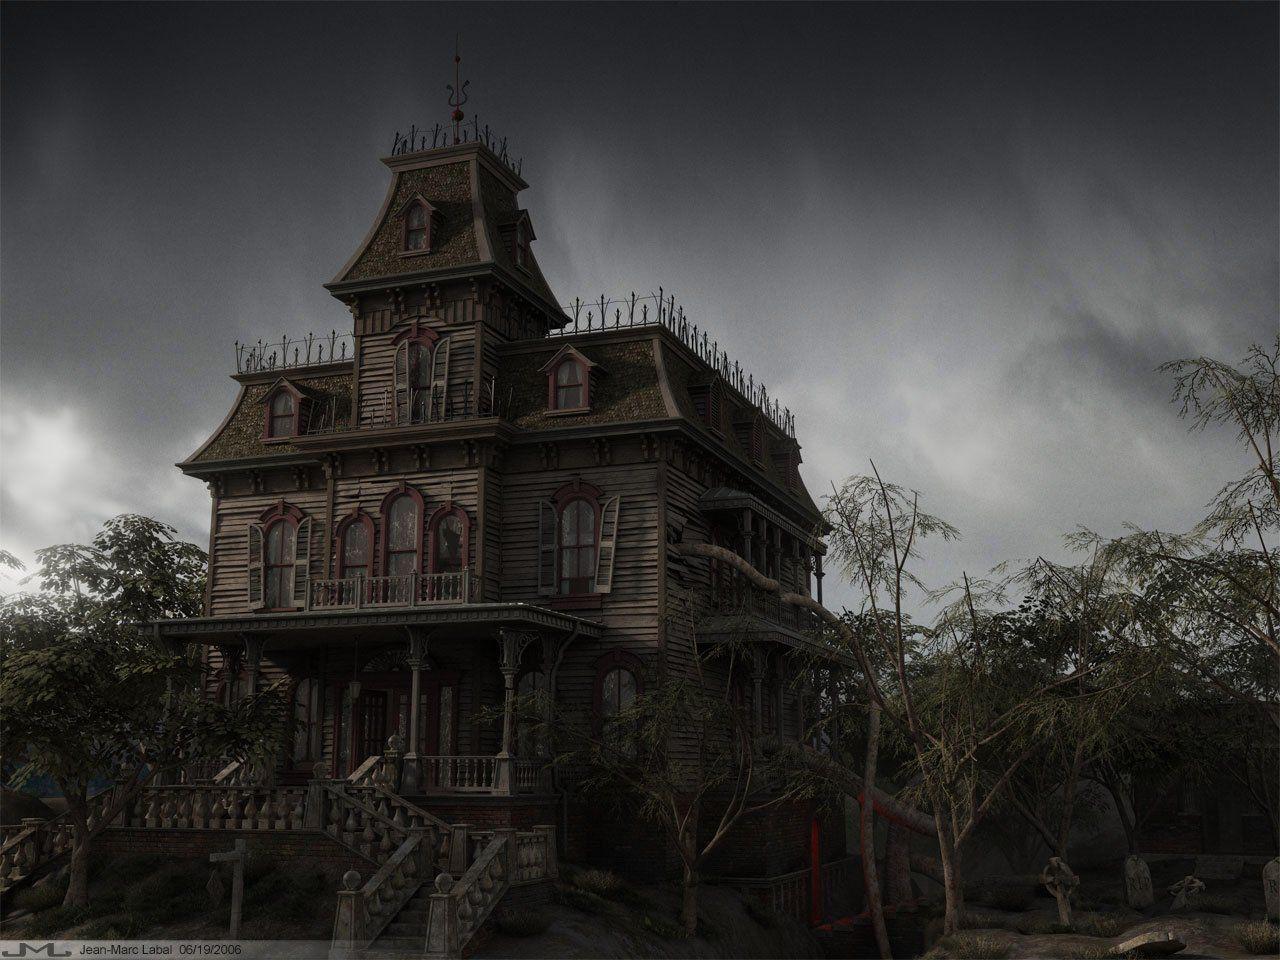 Creepy House. Creepy House 4 Wallpaper, Picture, Photo